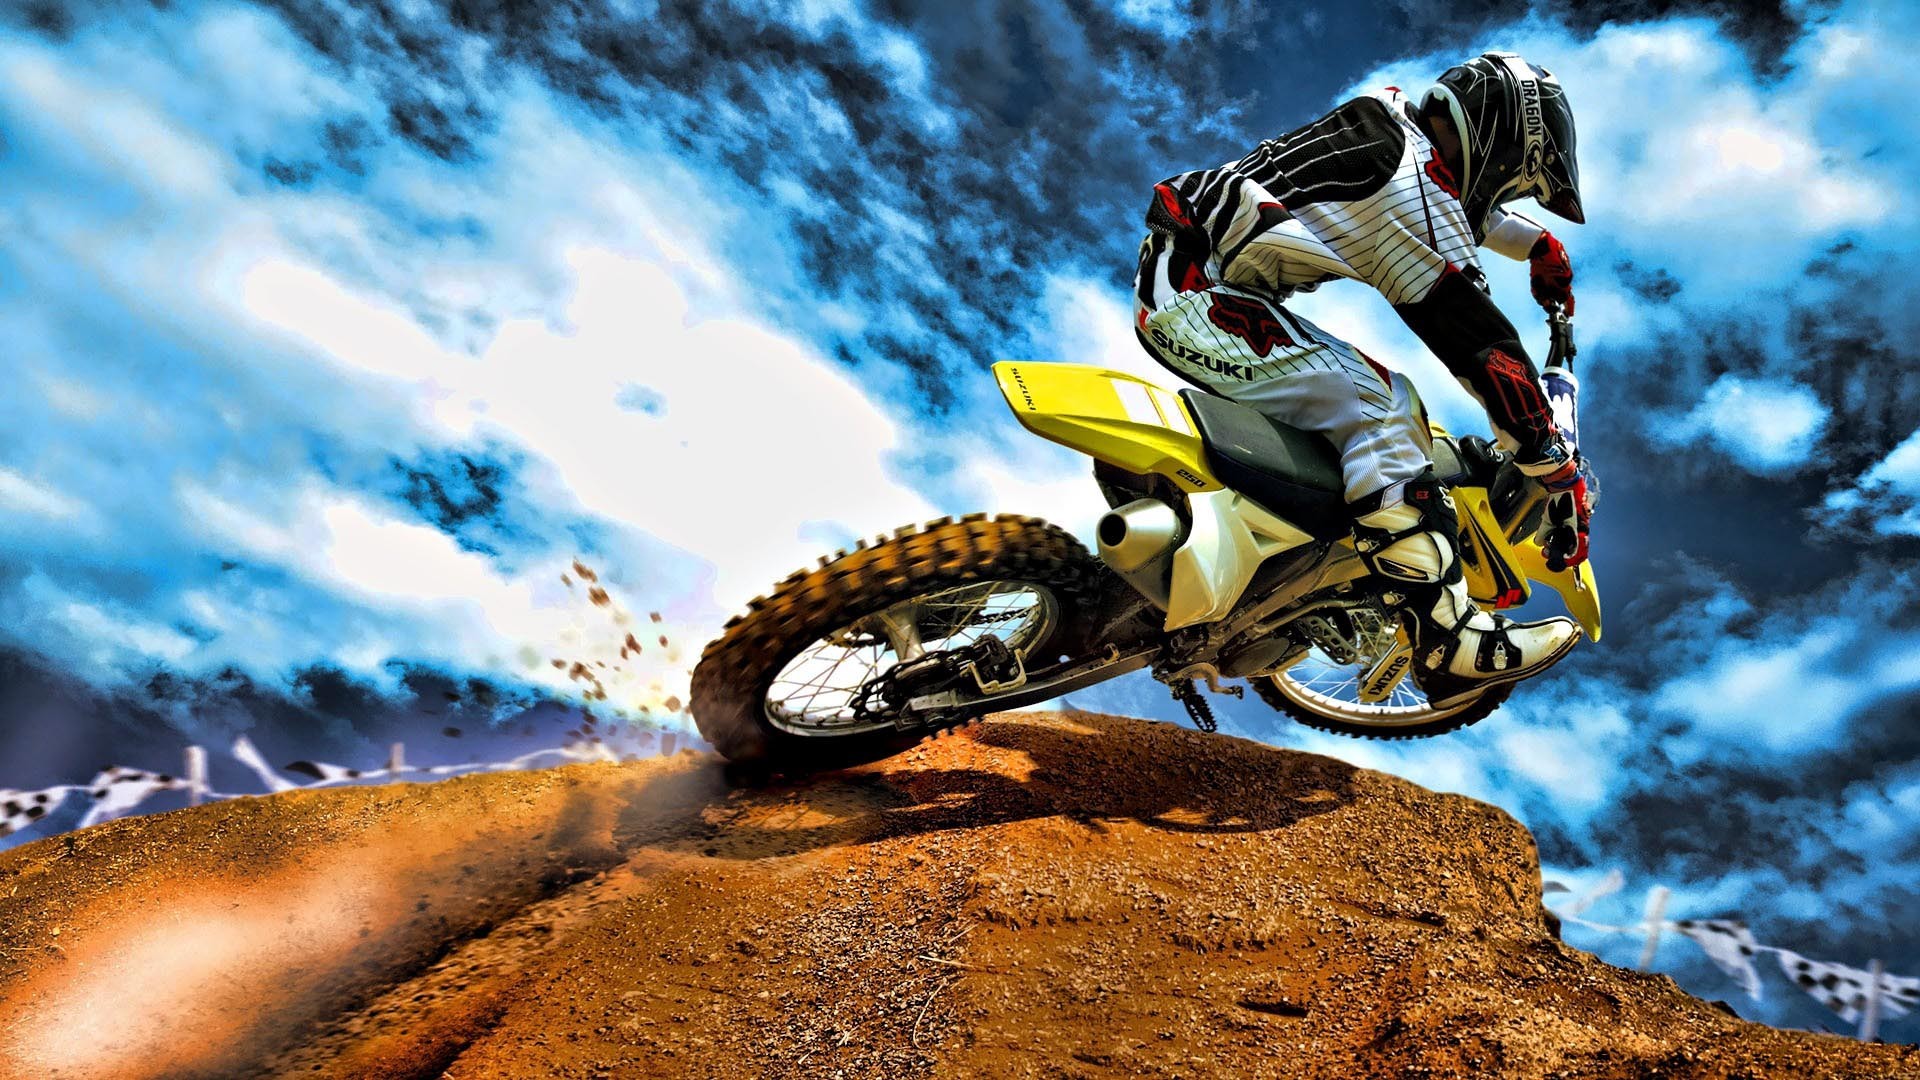 1920x1080 Motocross HDR Bike HD Wallpaper Â» FullHDWpp - Full HD Wallpapers .